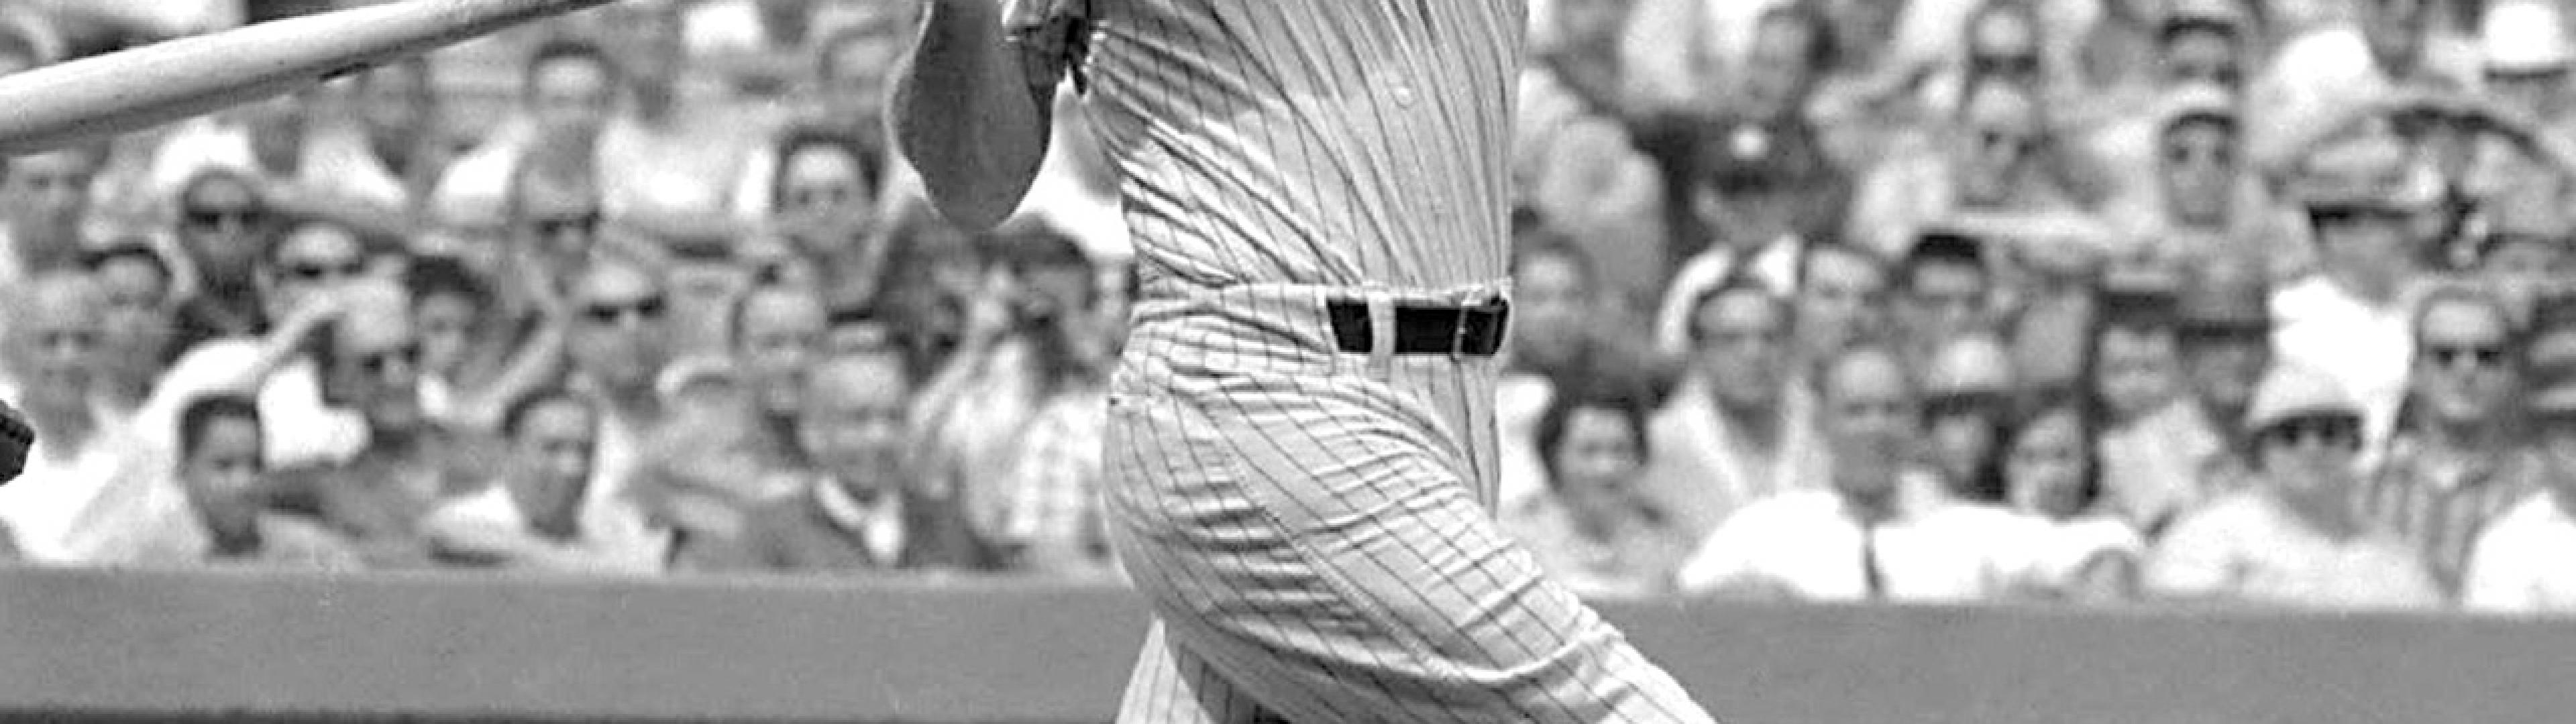 Baseball Mlb New York Yankees Mickey Mantle O1gq